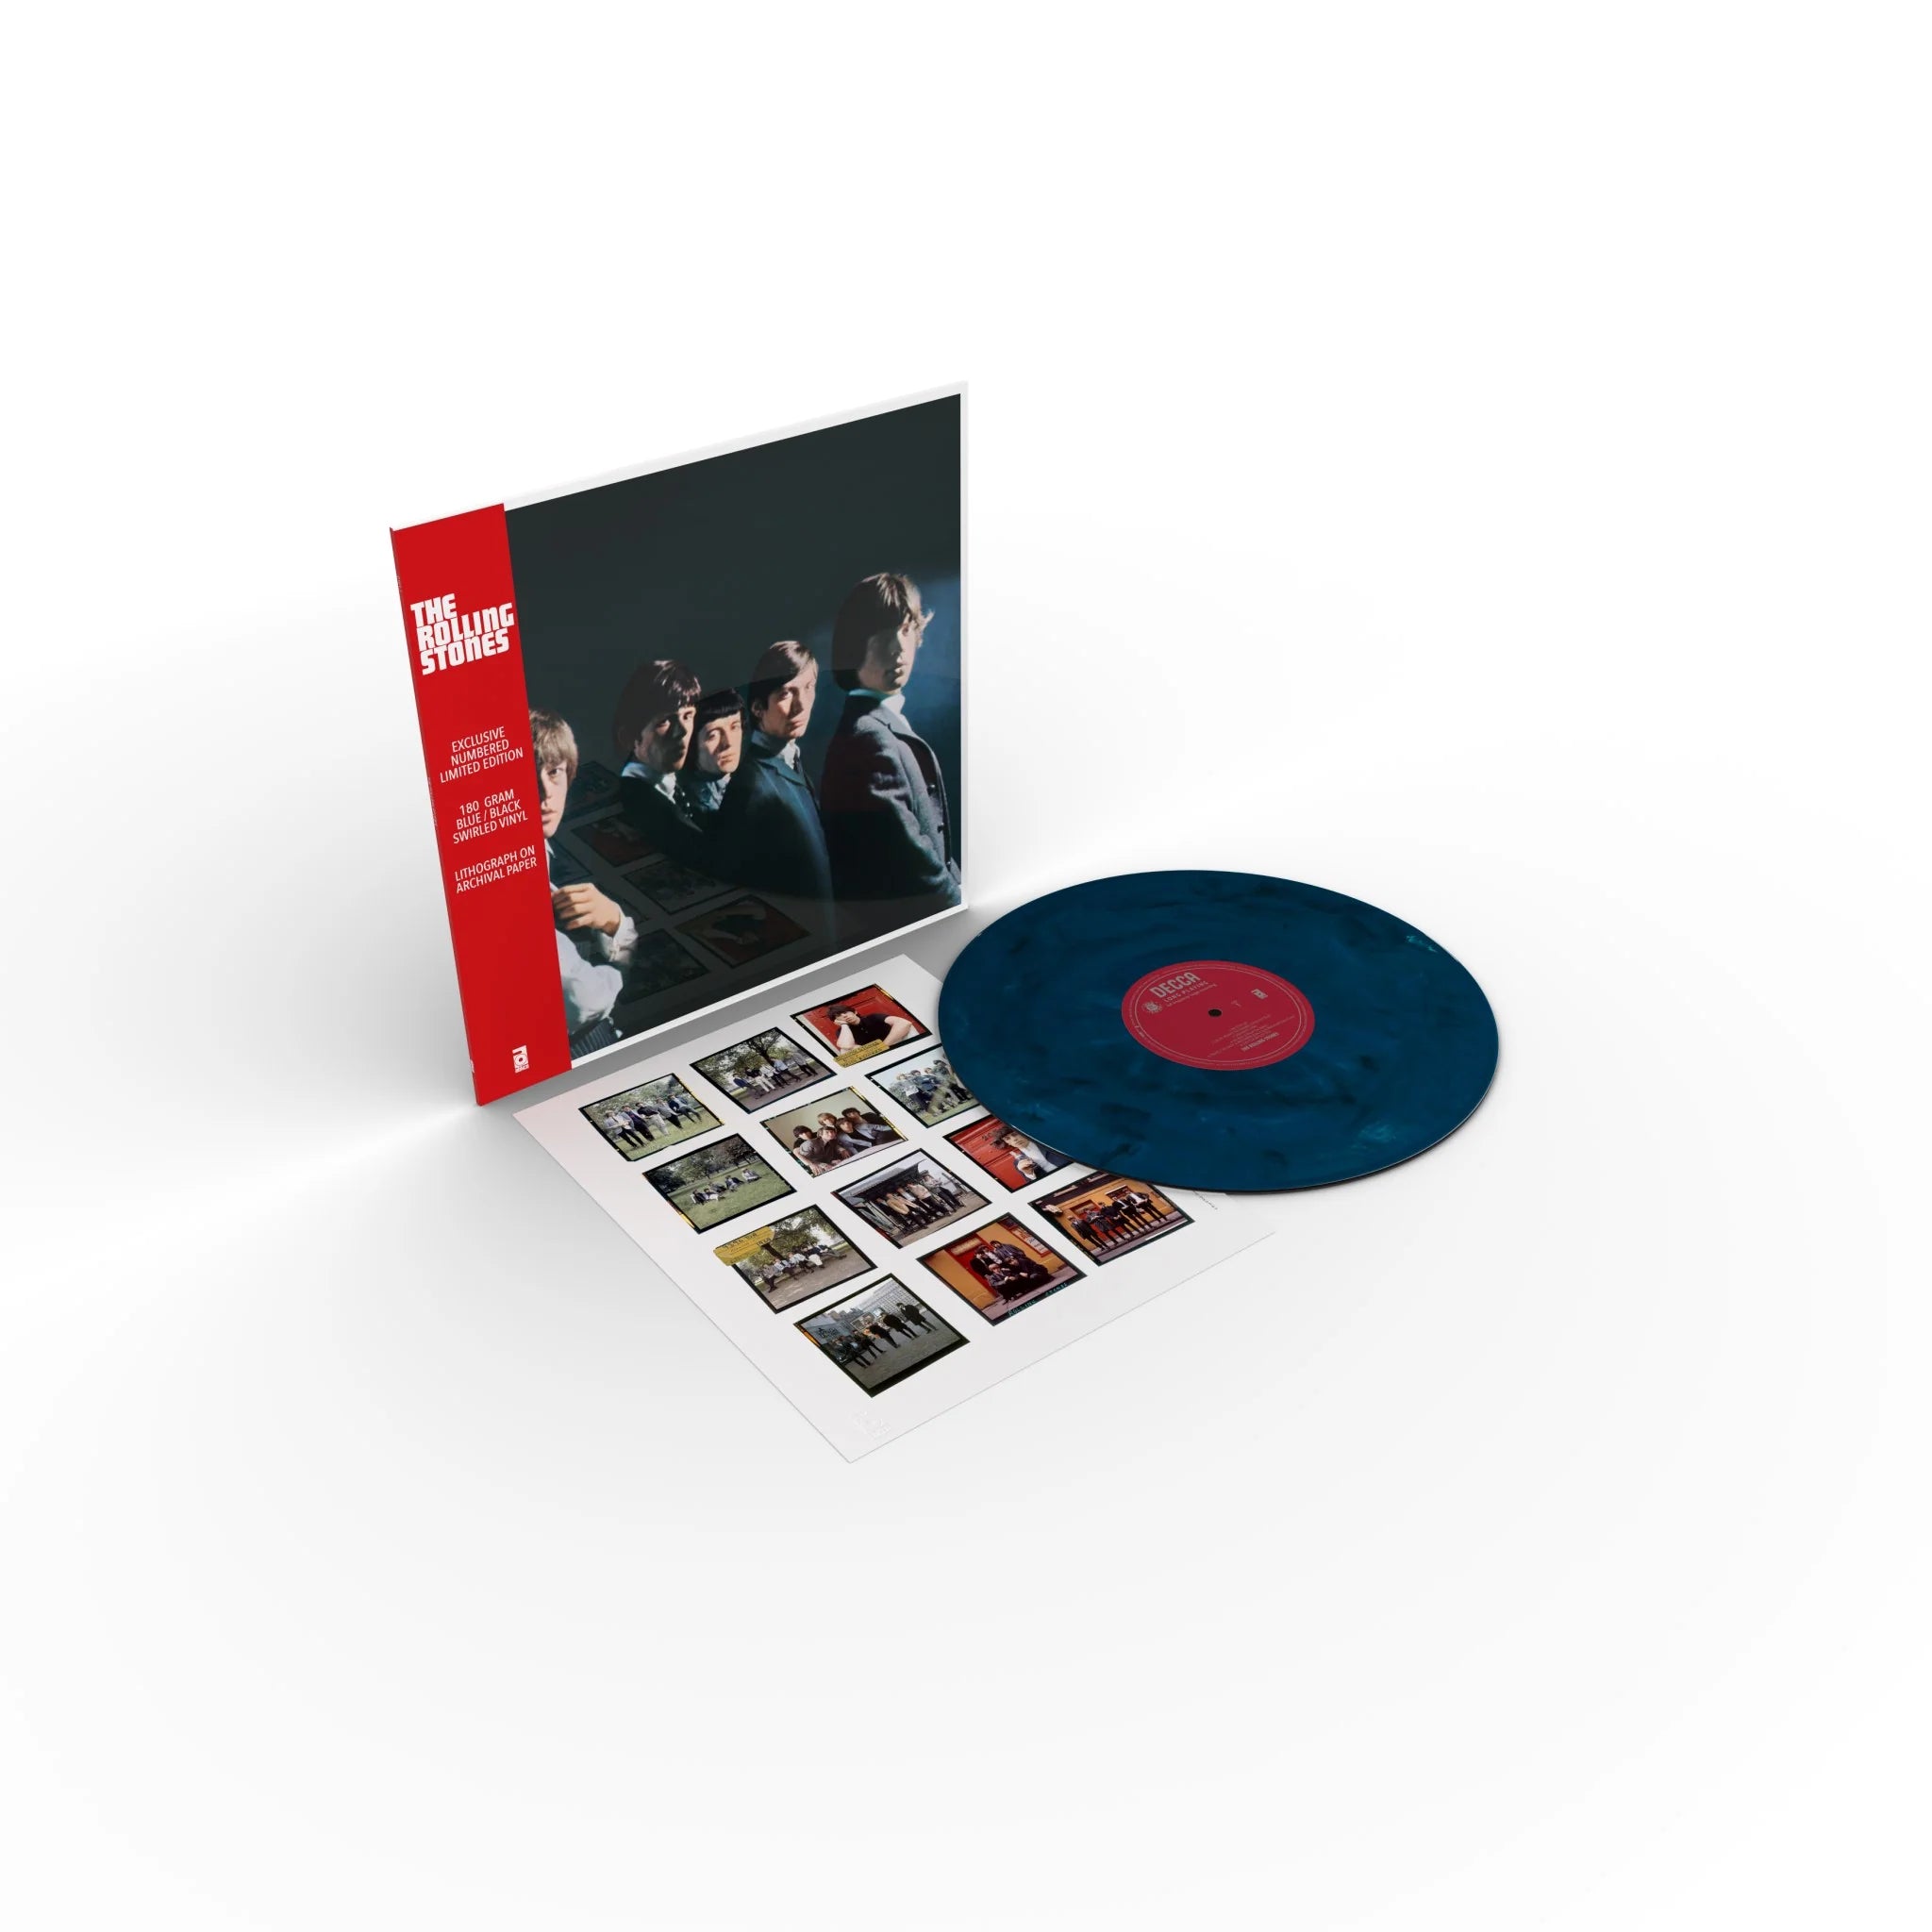 RSD ROLLING STONES - Rolling Stones - 1 LP - 180g Blue and Black Swirl Vinyl [RSD 2024]